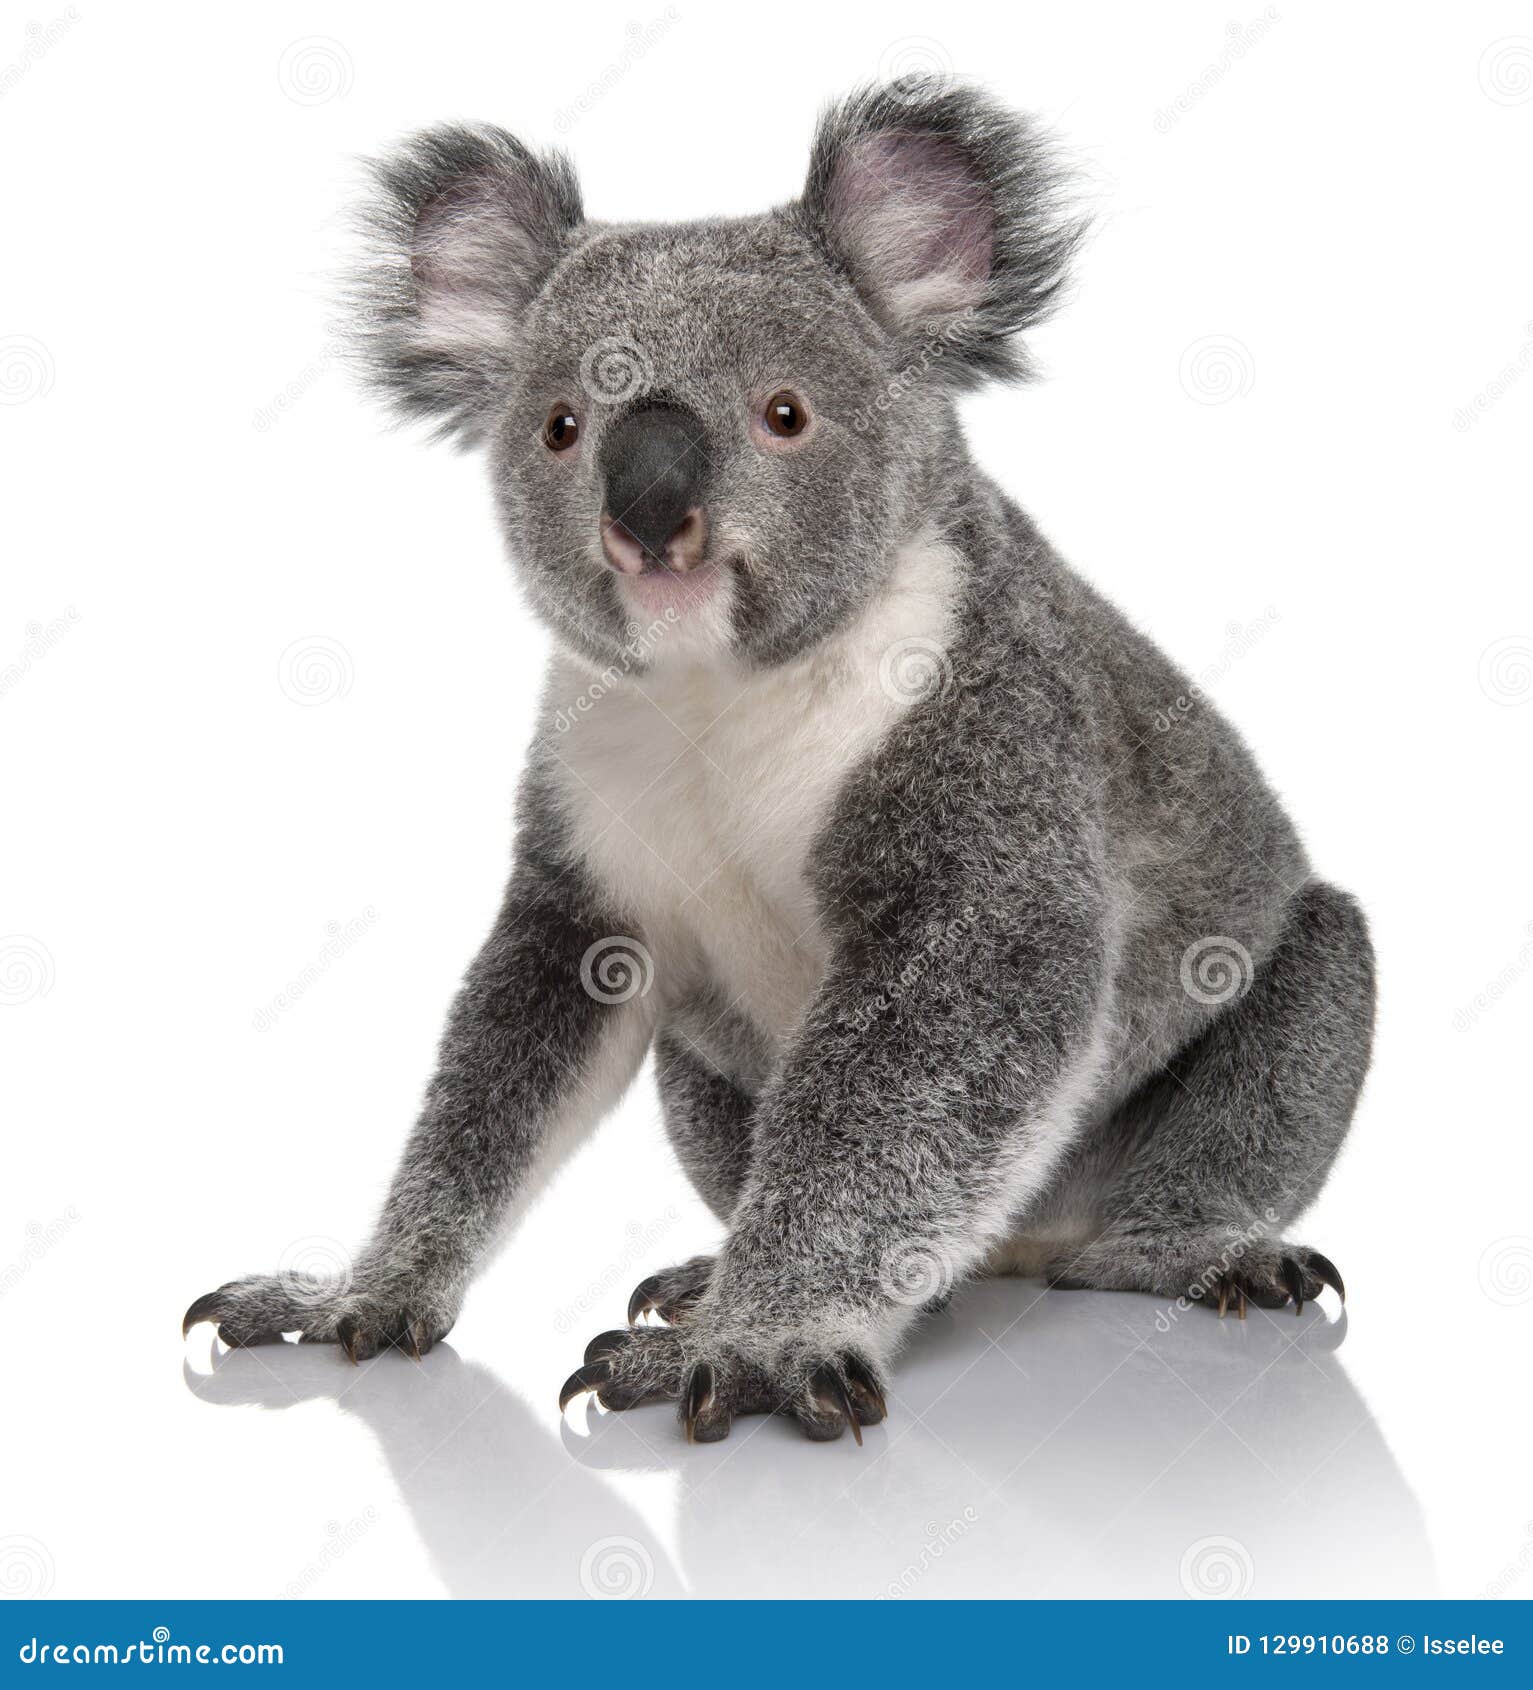 young koala, phascolarctos cinereus, 14 months old